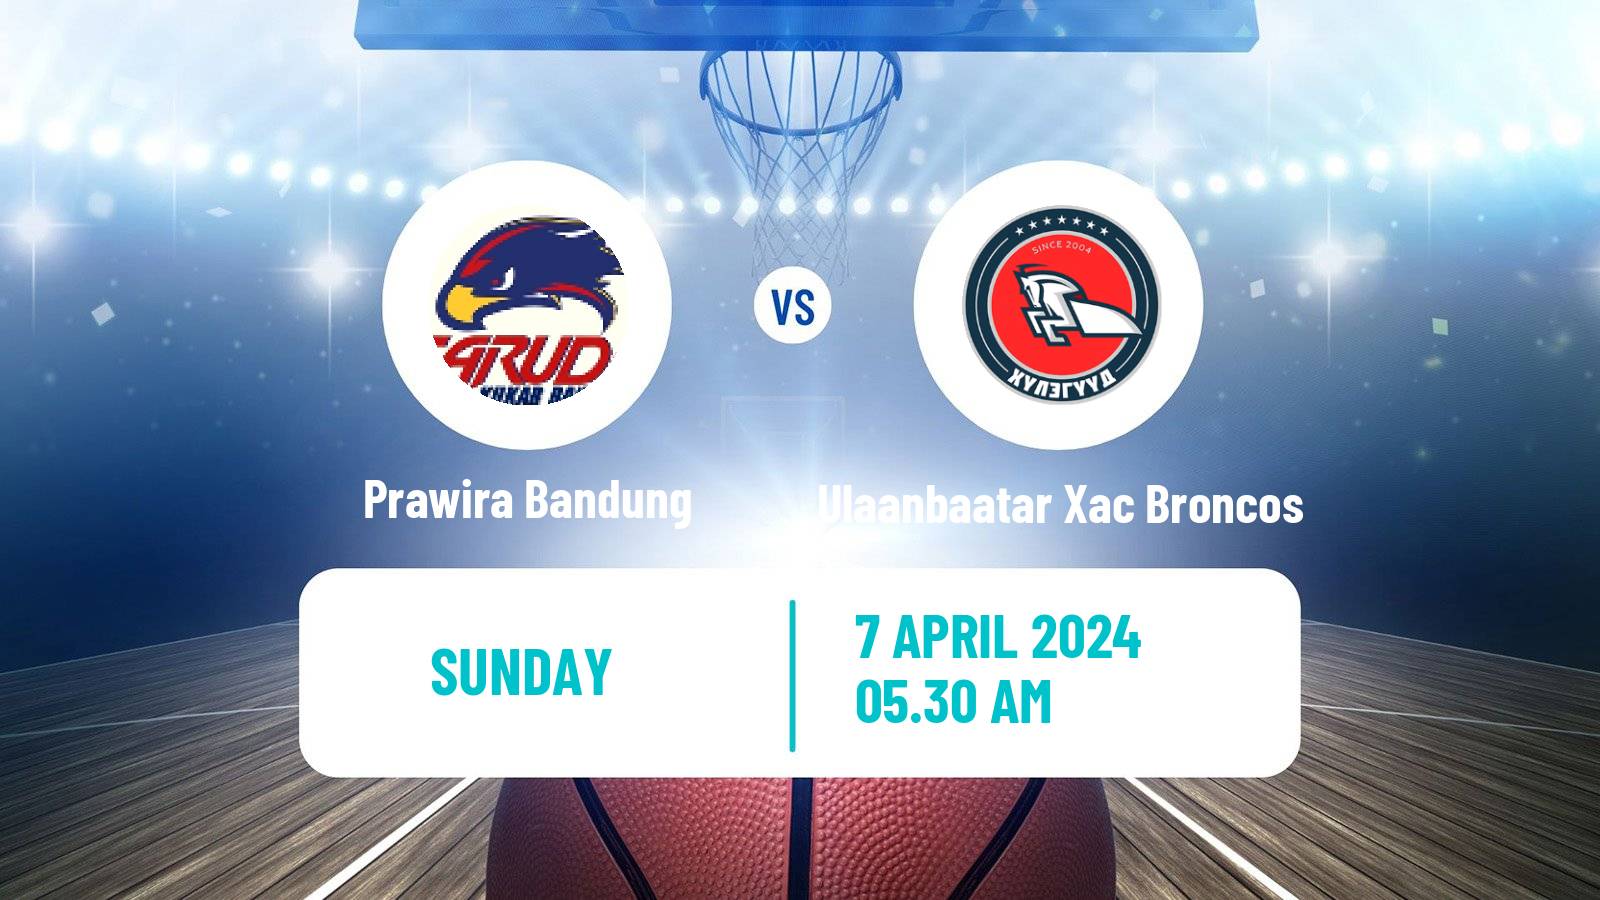 Basketball Asia Champions League Basketball Prawira Bandung - Ulaanbaatar Xac Broncos